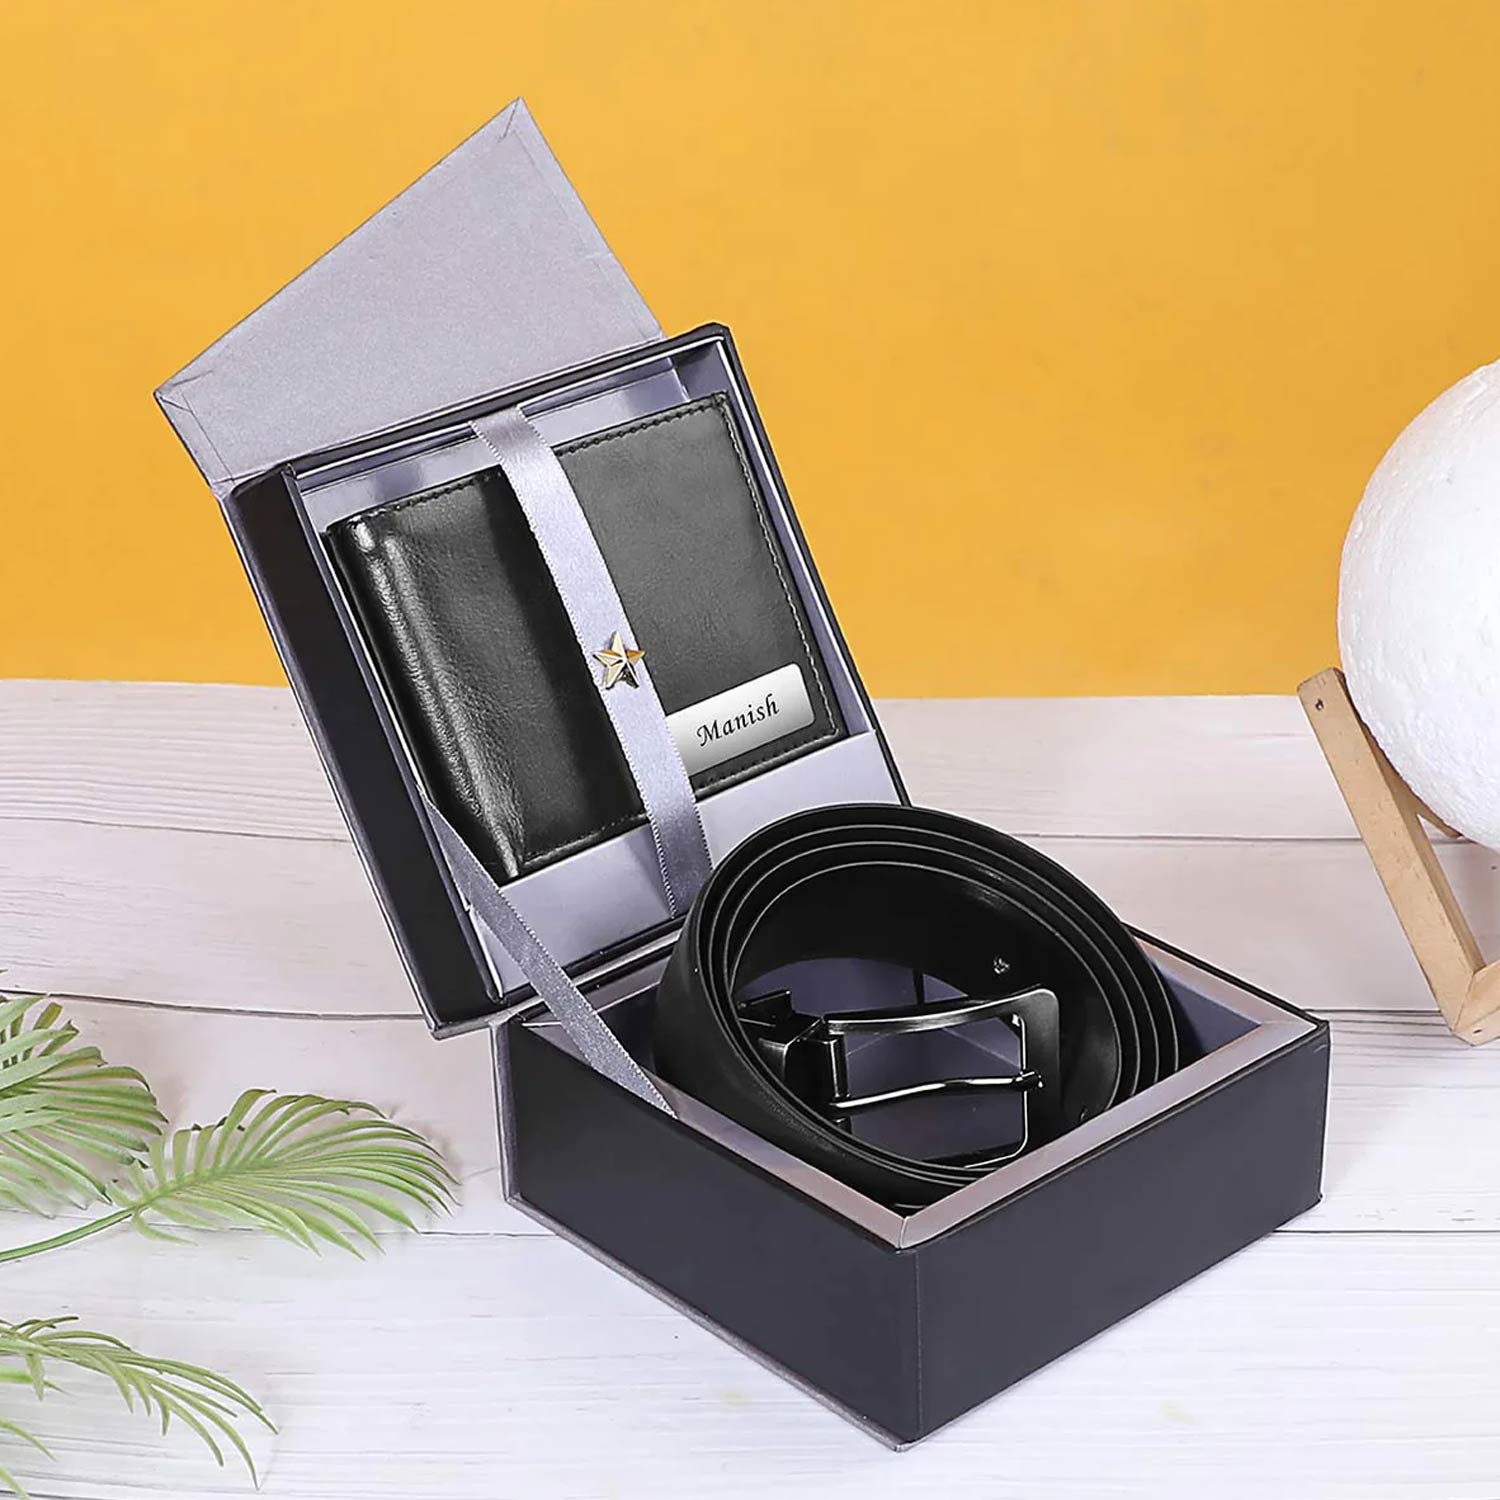 Voxman Wallet & Belt Gift Set - Black - New - NIB | eBay